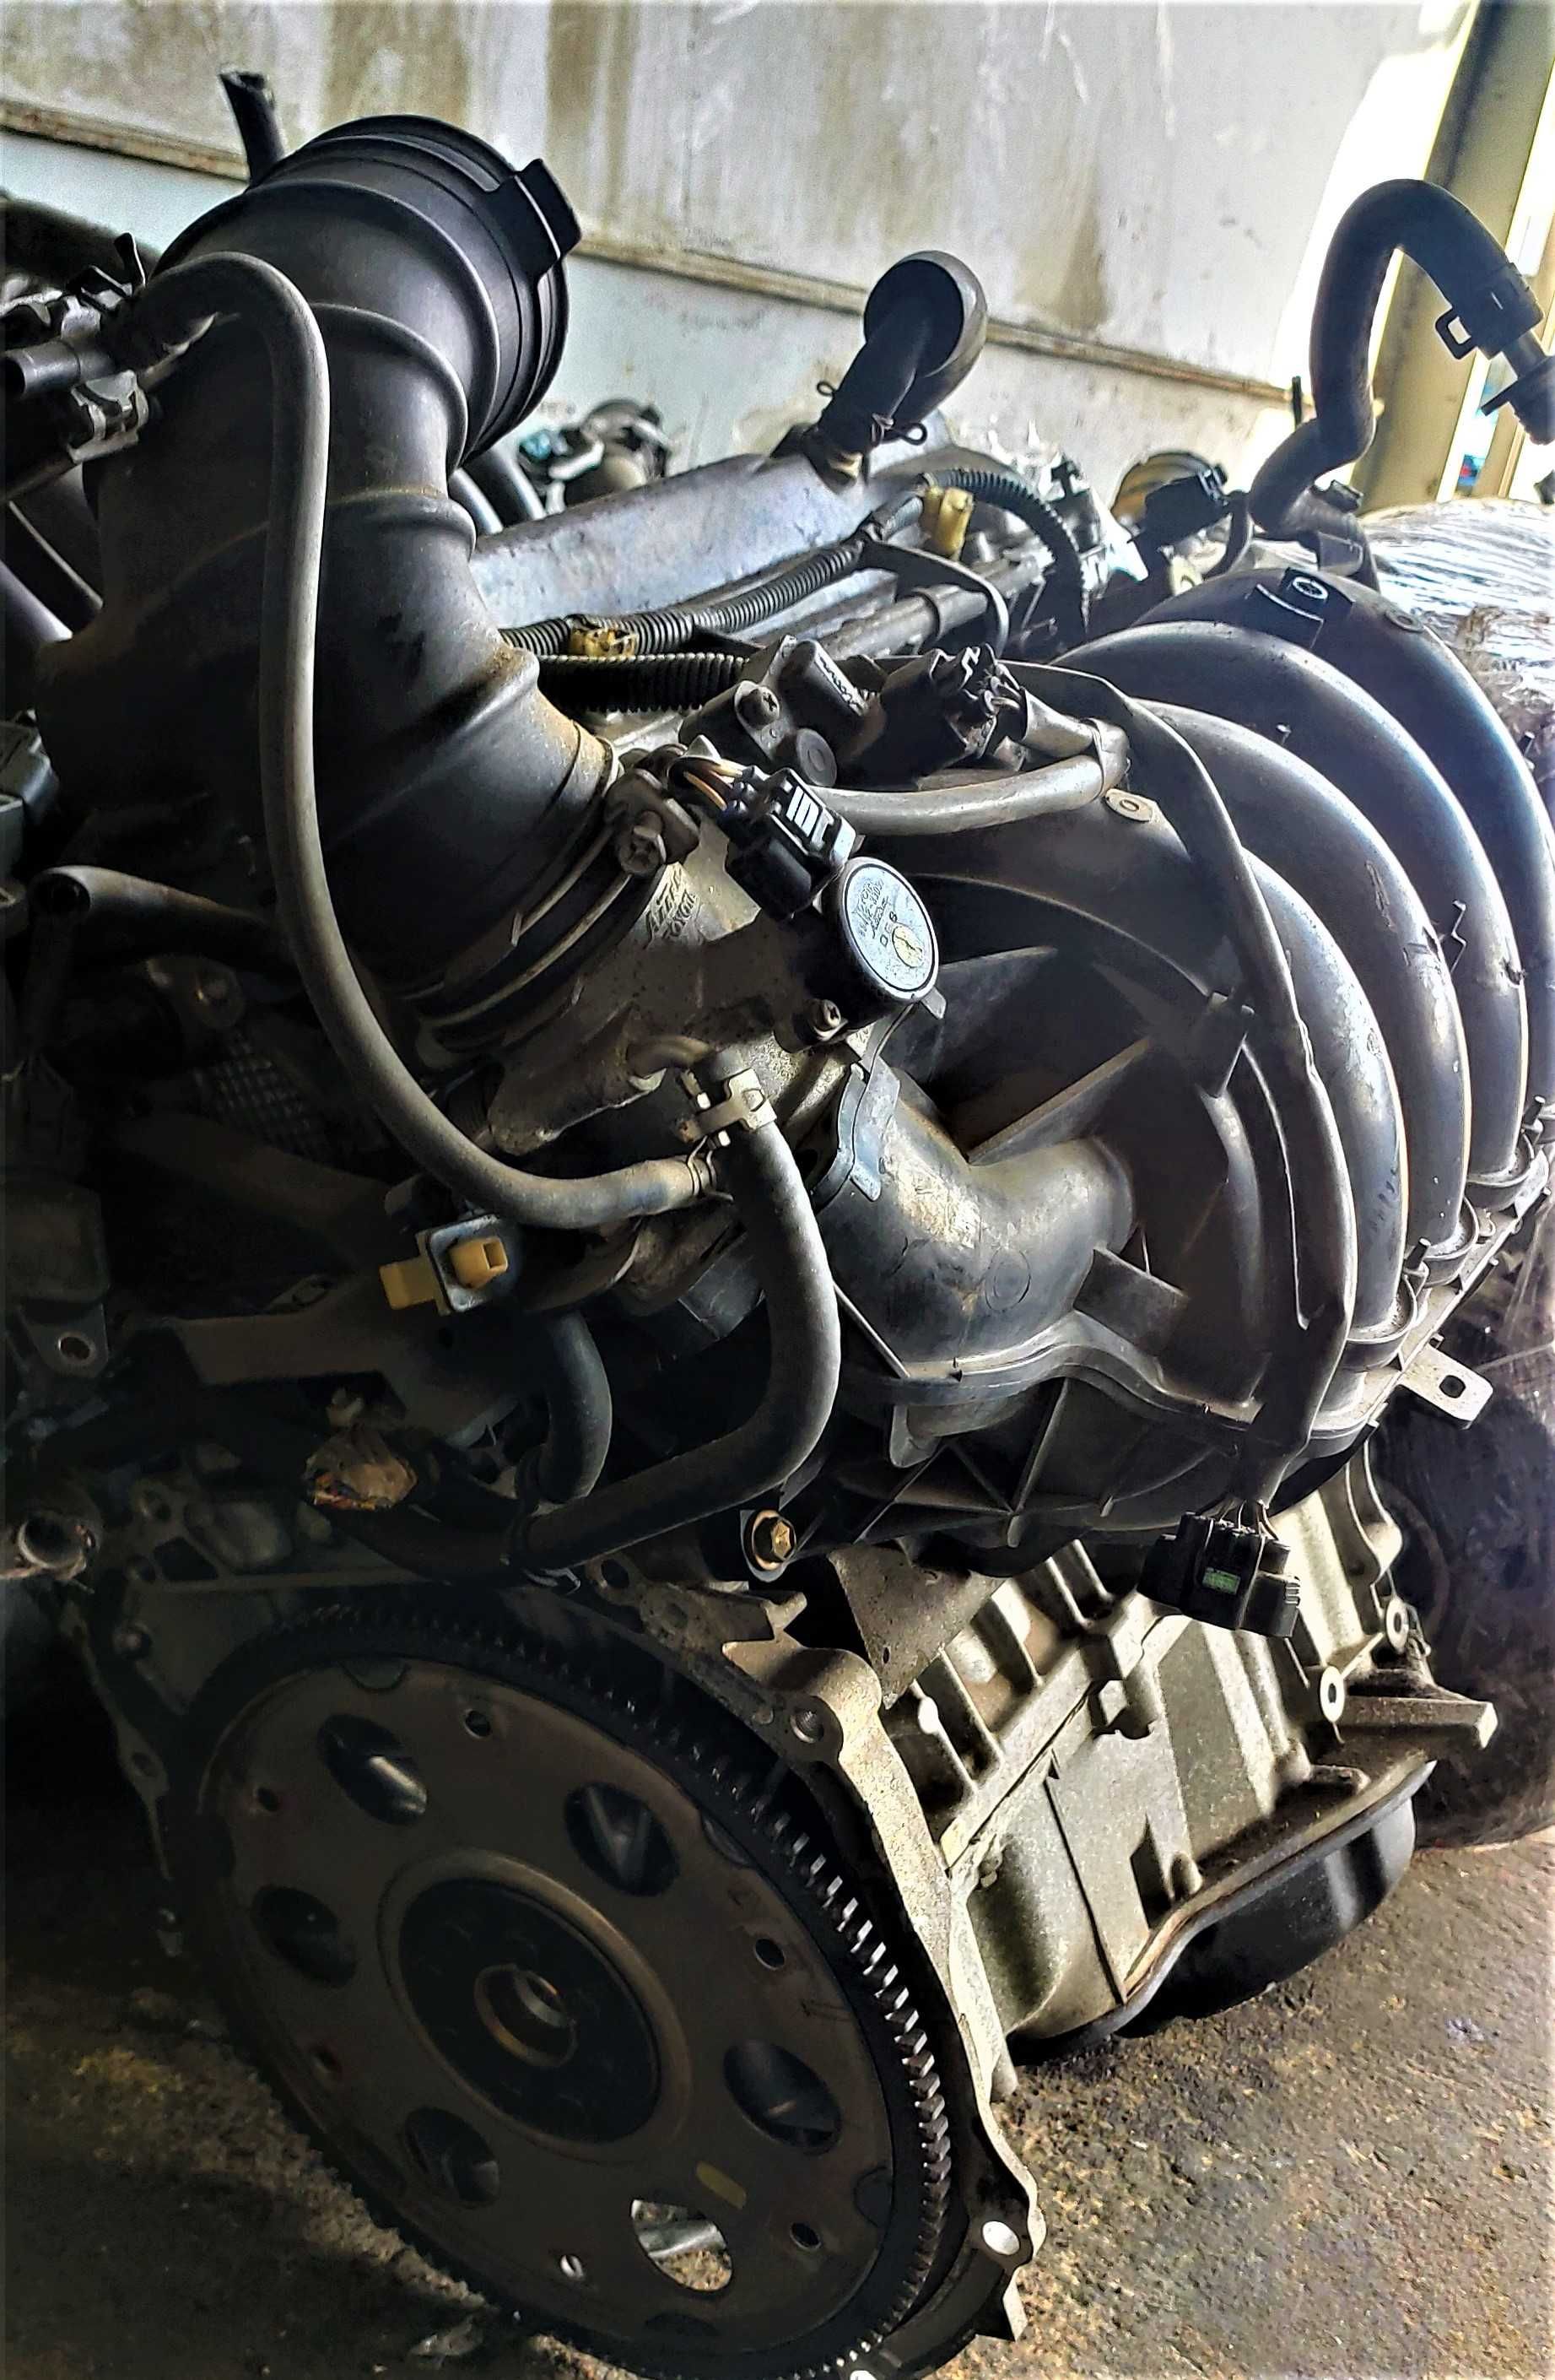 Двигатель на Toyota Highlander, 2AZ-FE (VVT-i), объем 2.4 л.